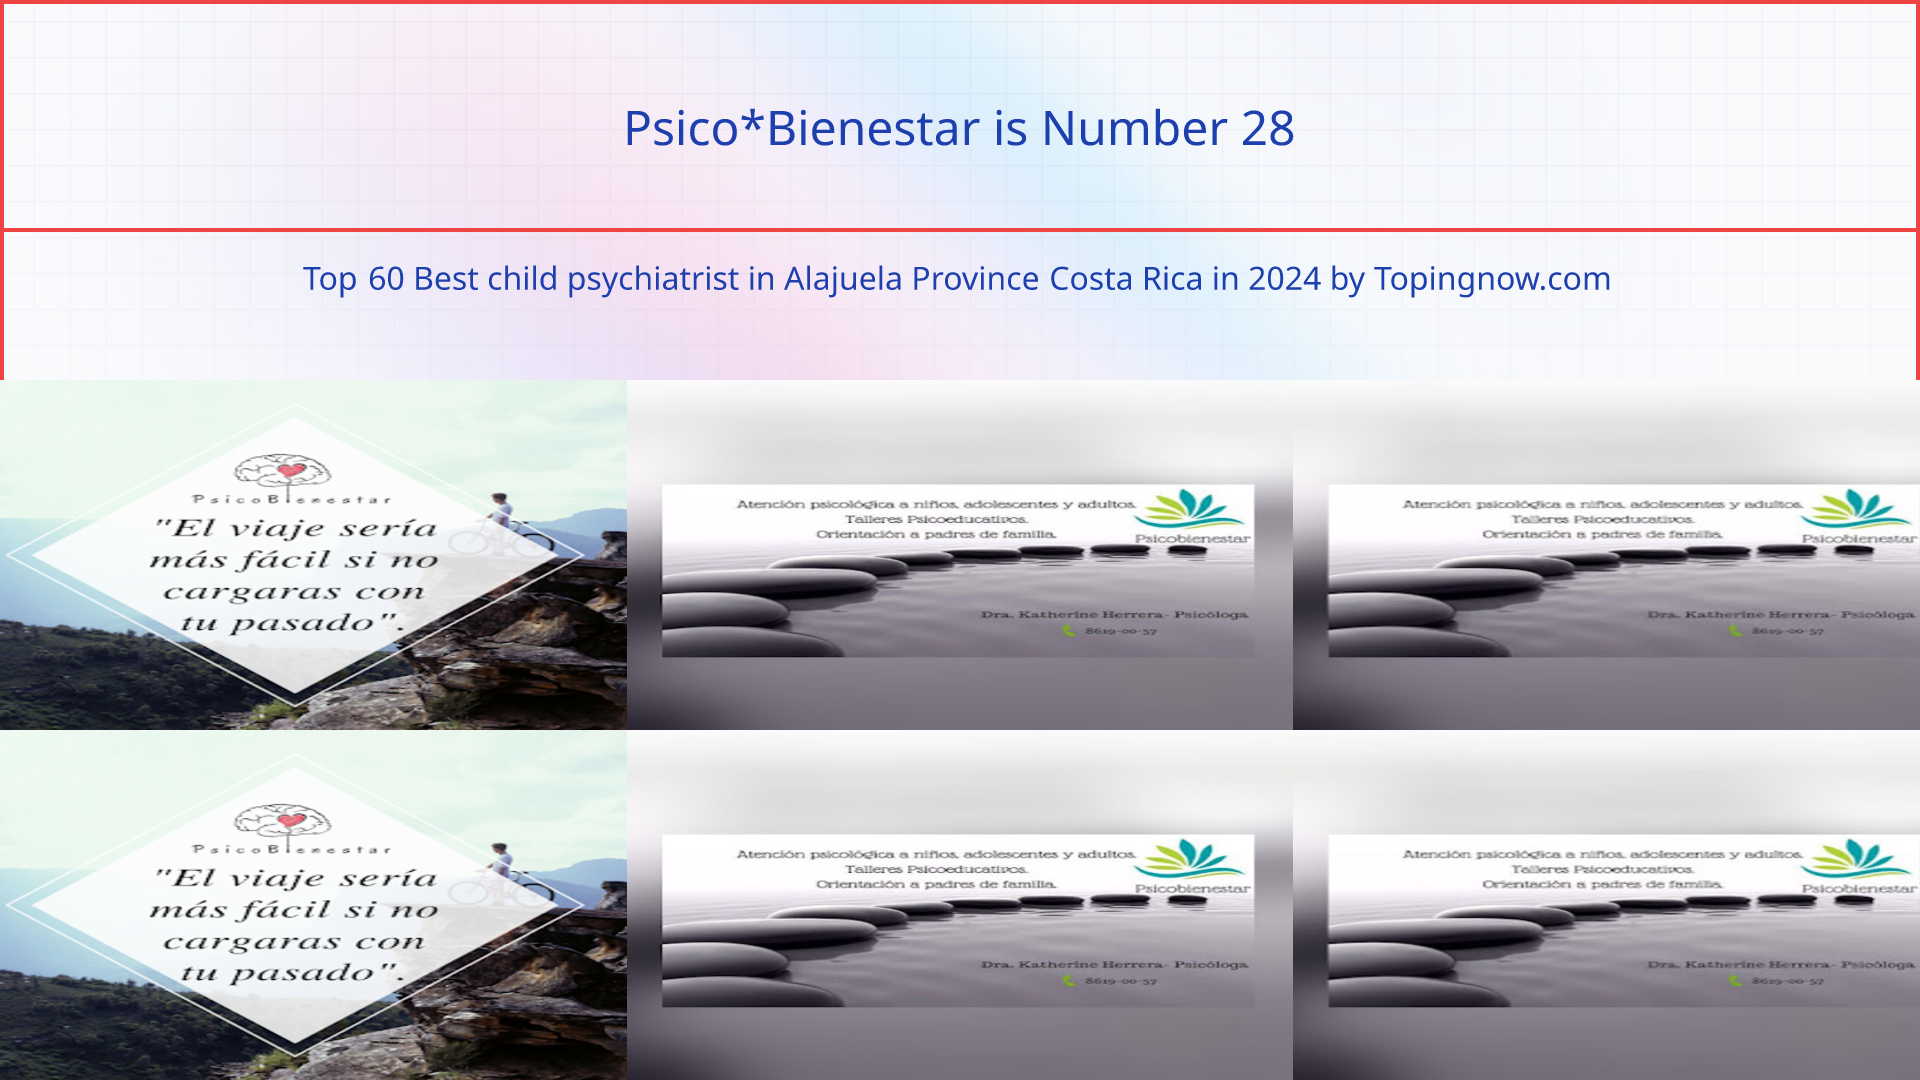 Psico*Bienestar: Top 60 Best child psychiatrist in Alajuela Province Costa Rica in 2024